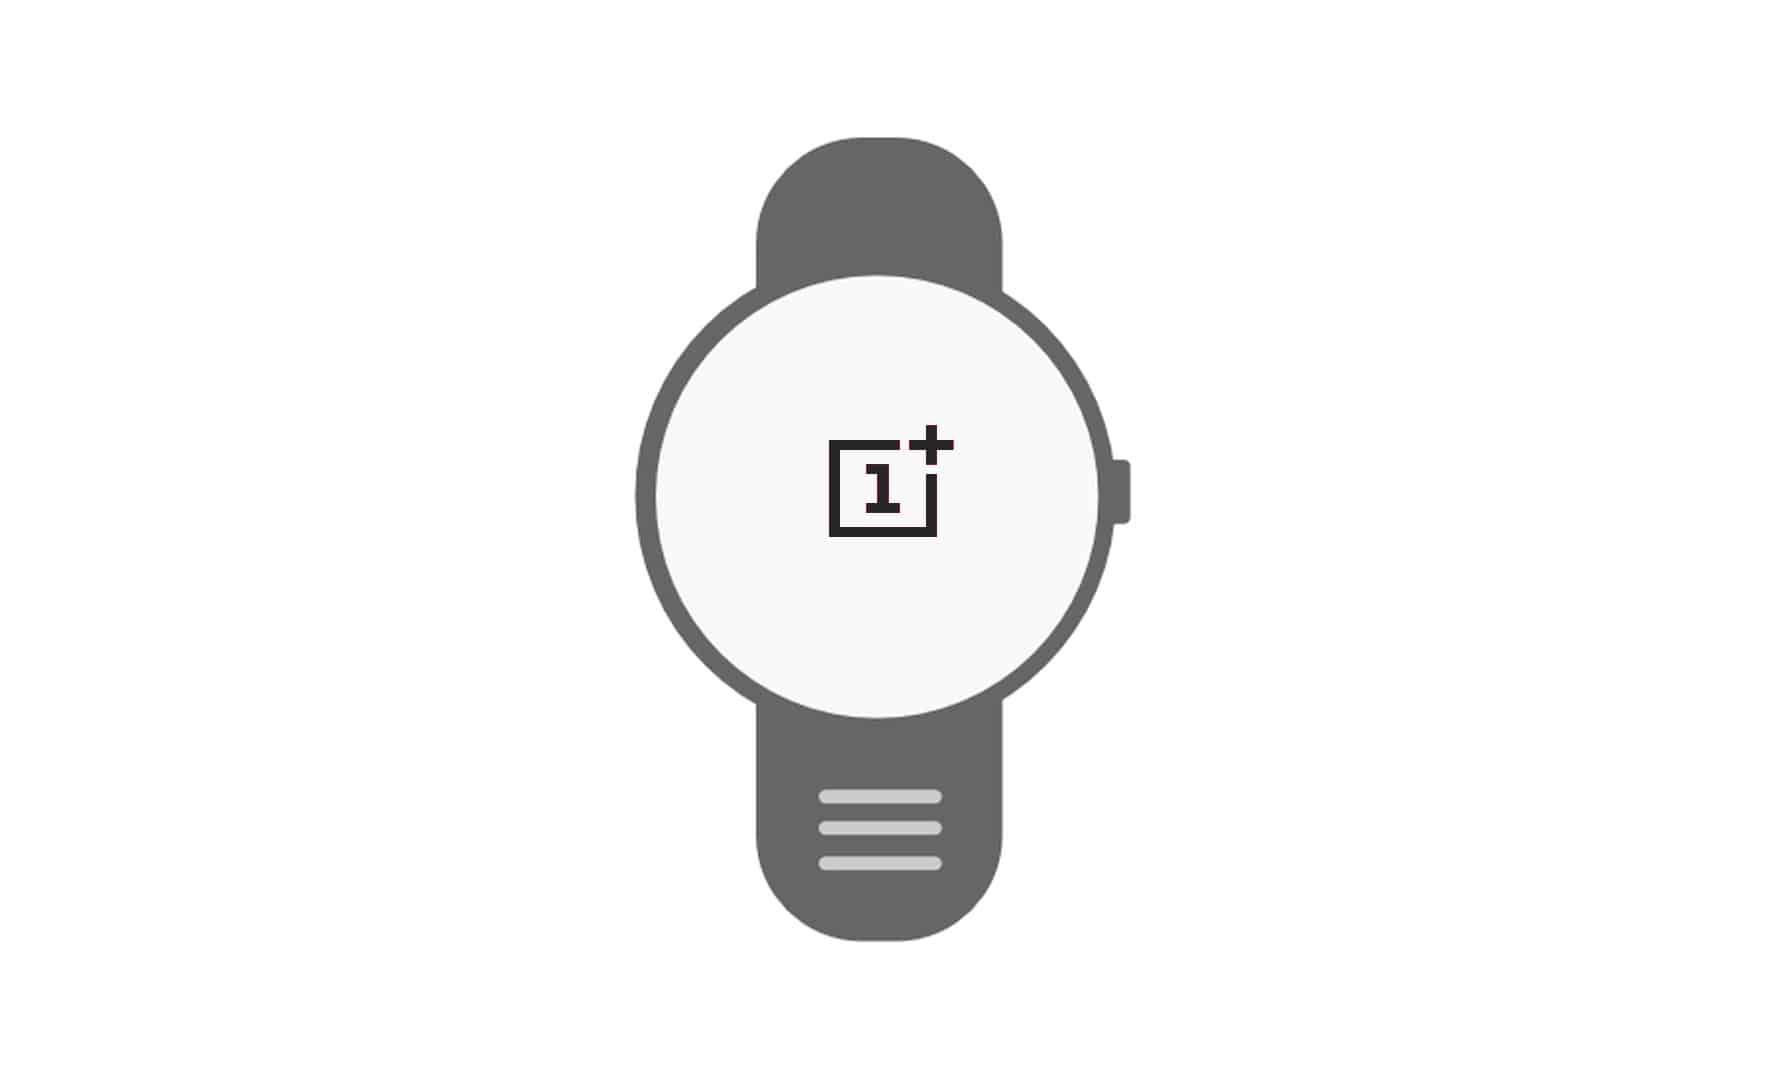 OnePlus smartwatch concept image